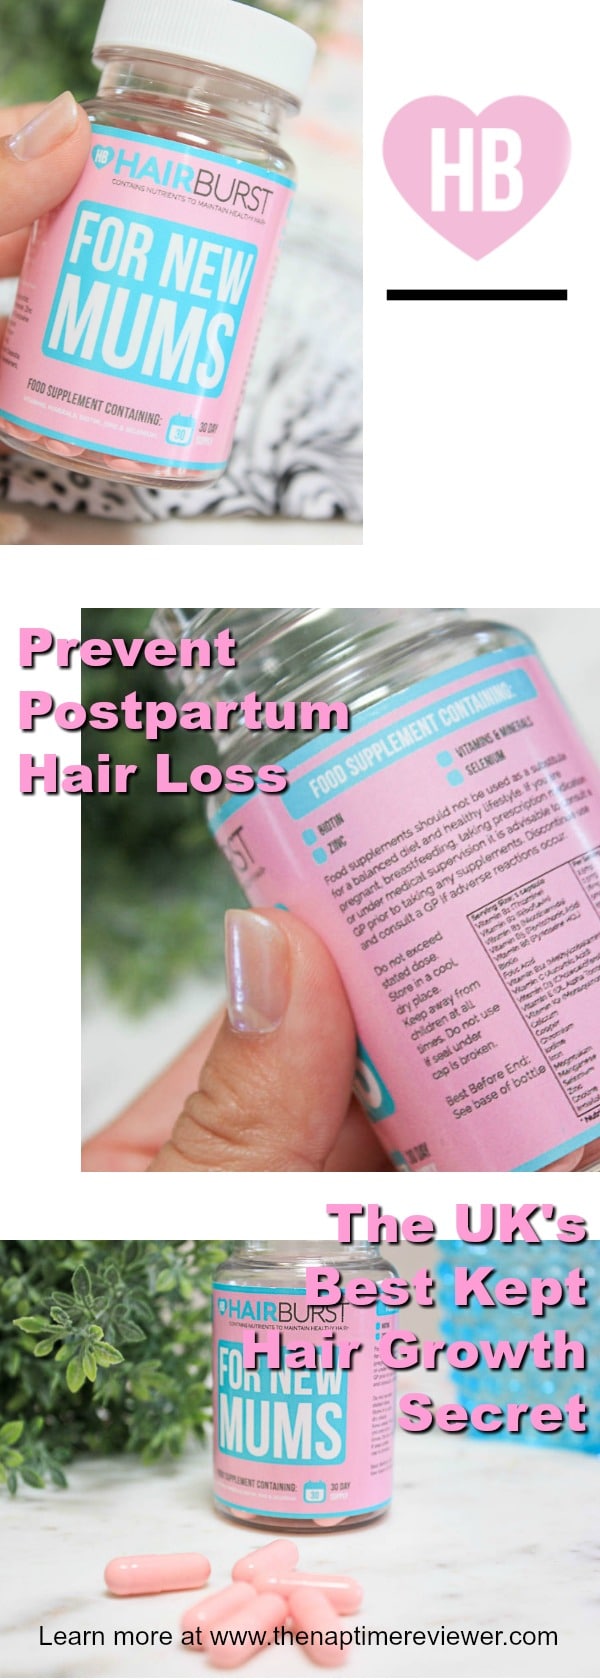 hairburst prevents postpartum hair loss